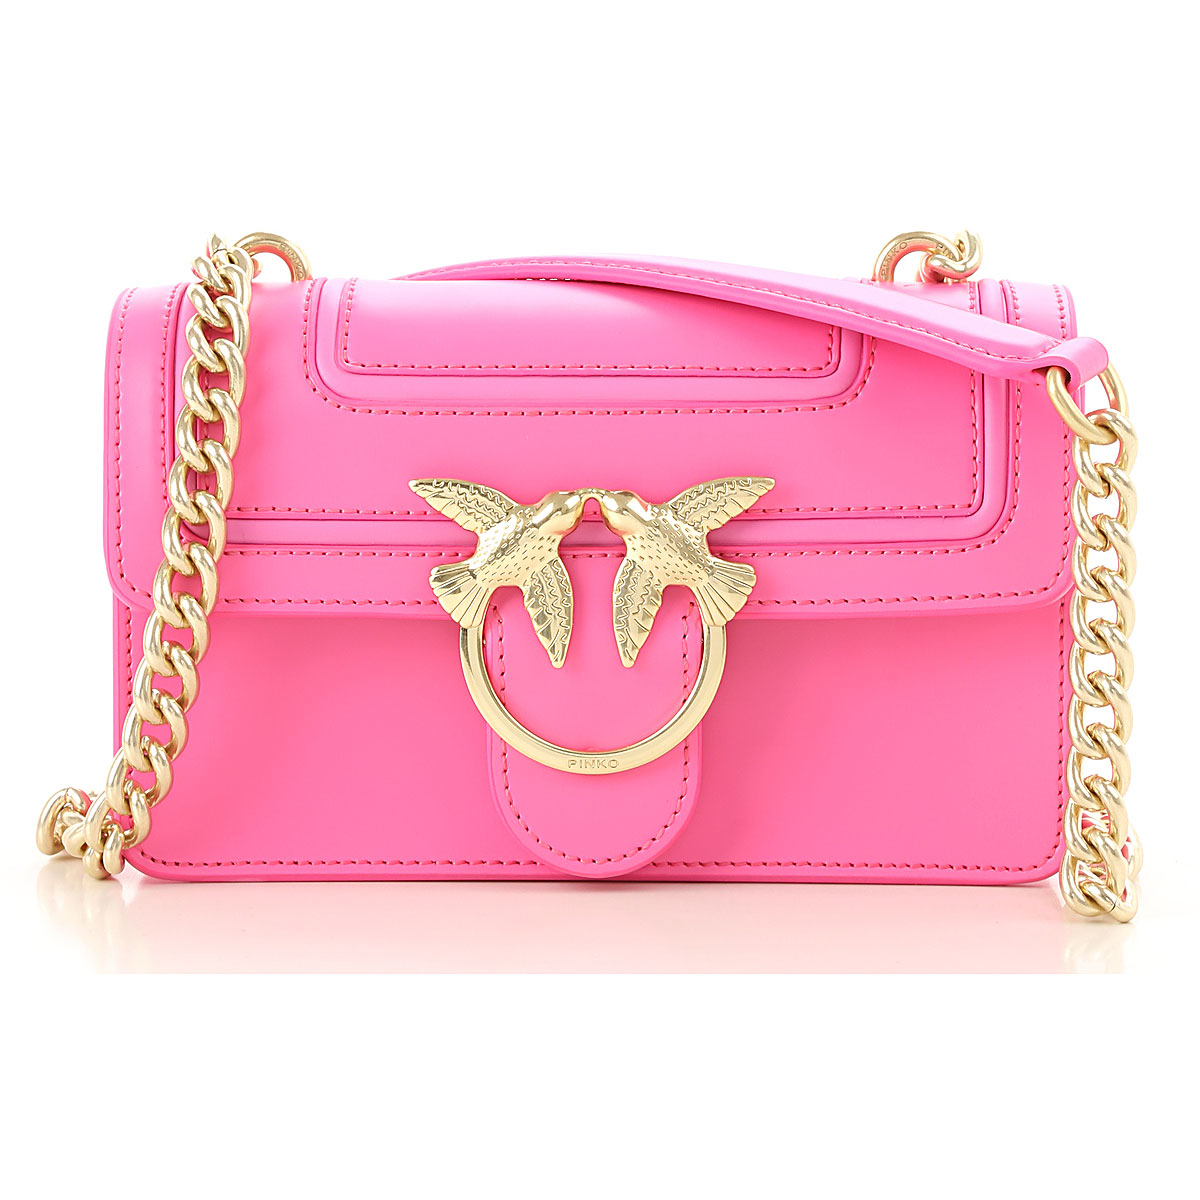 Handbags Pinko, Style code: 1p21afy5f-q44-minilove